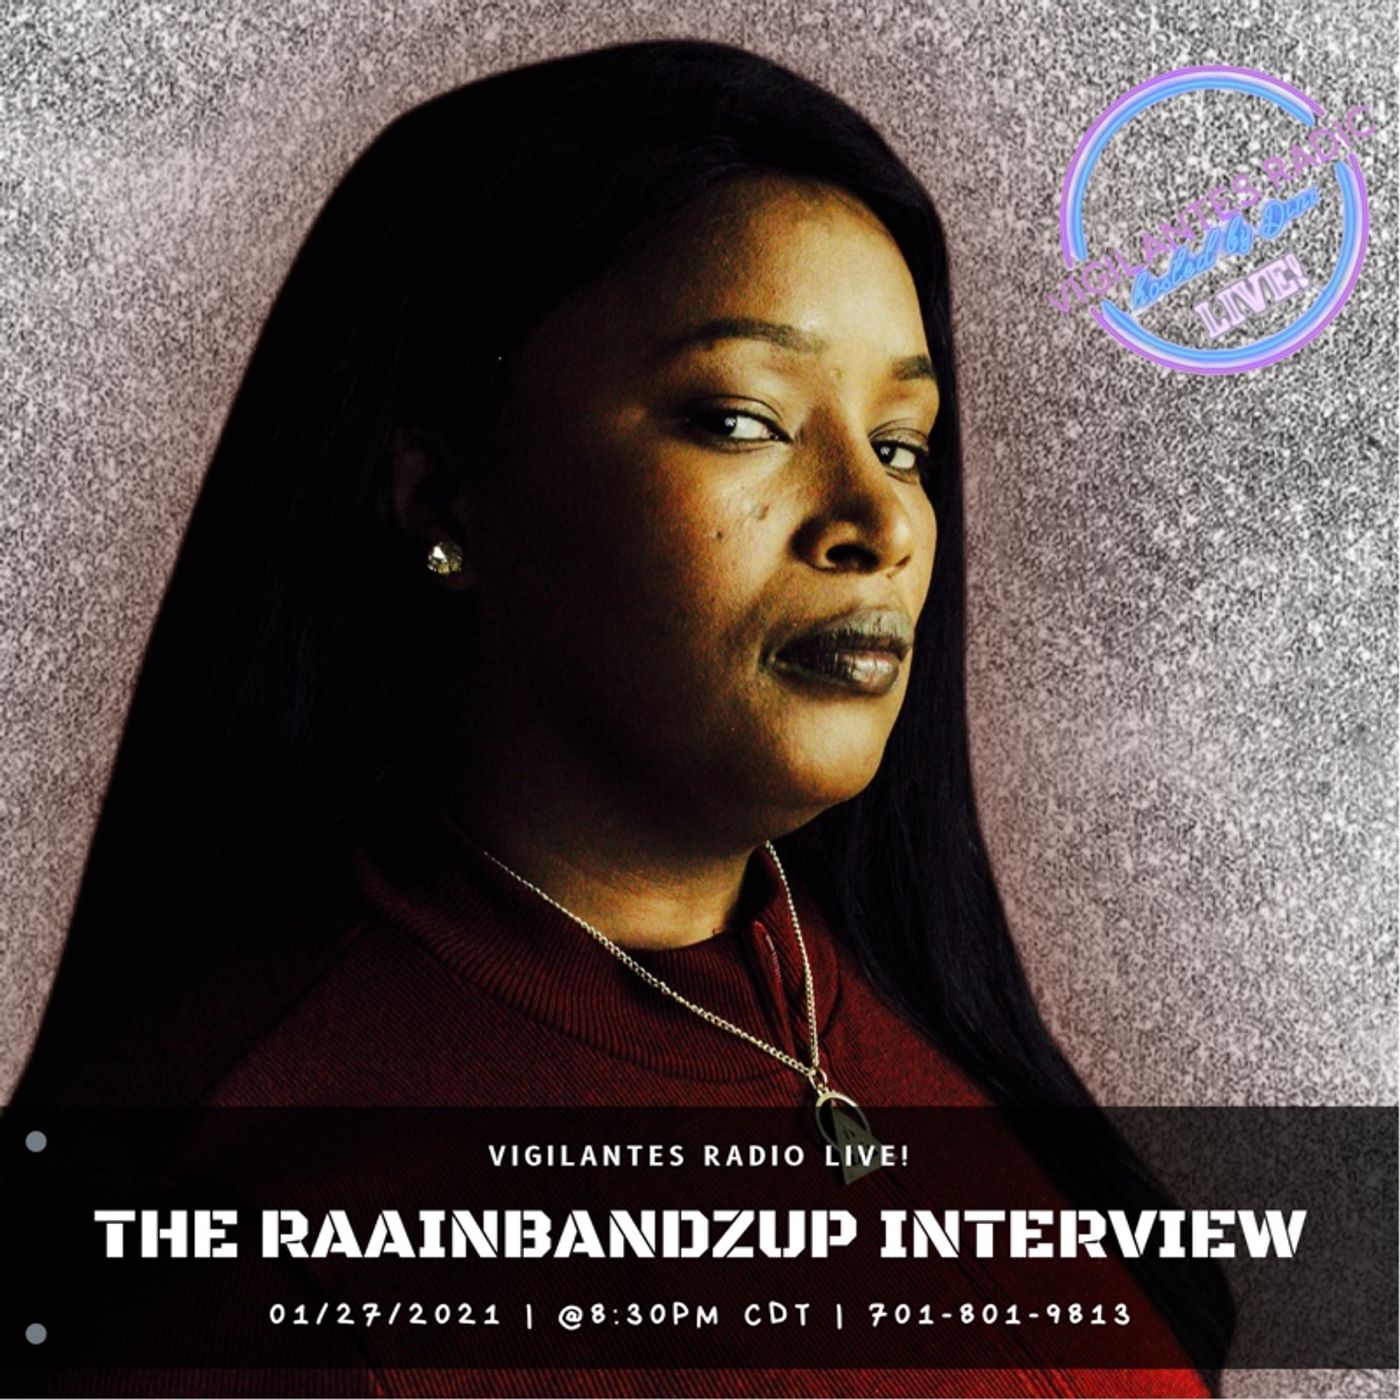 The Raainbandzup Interview. Image